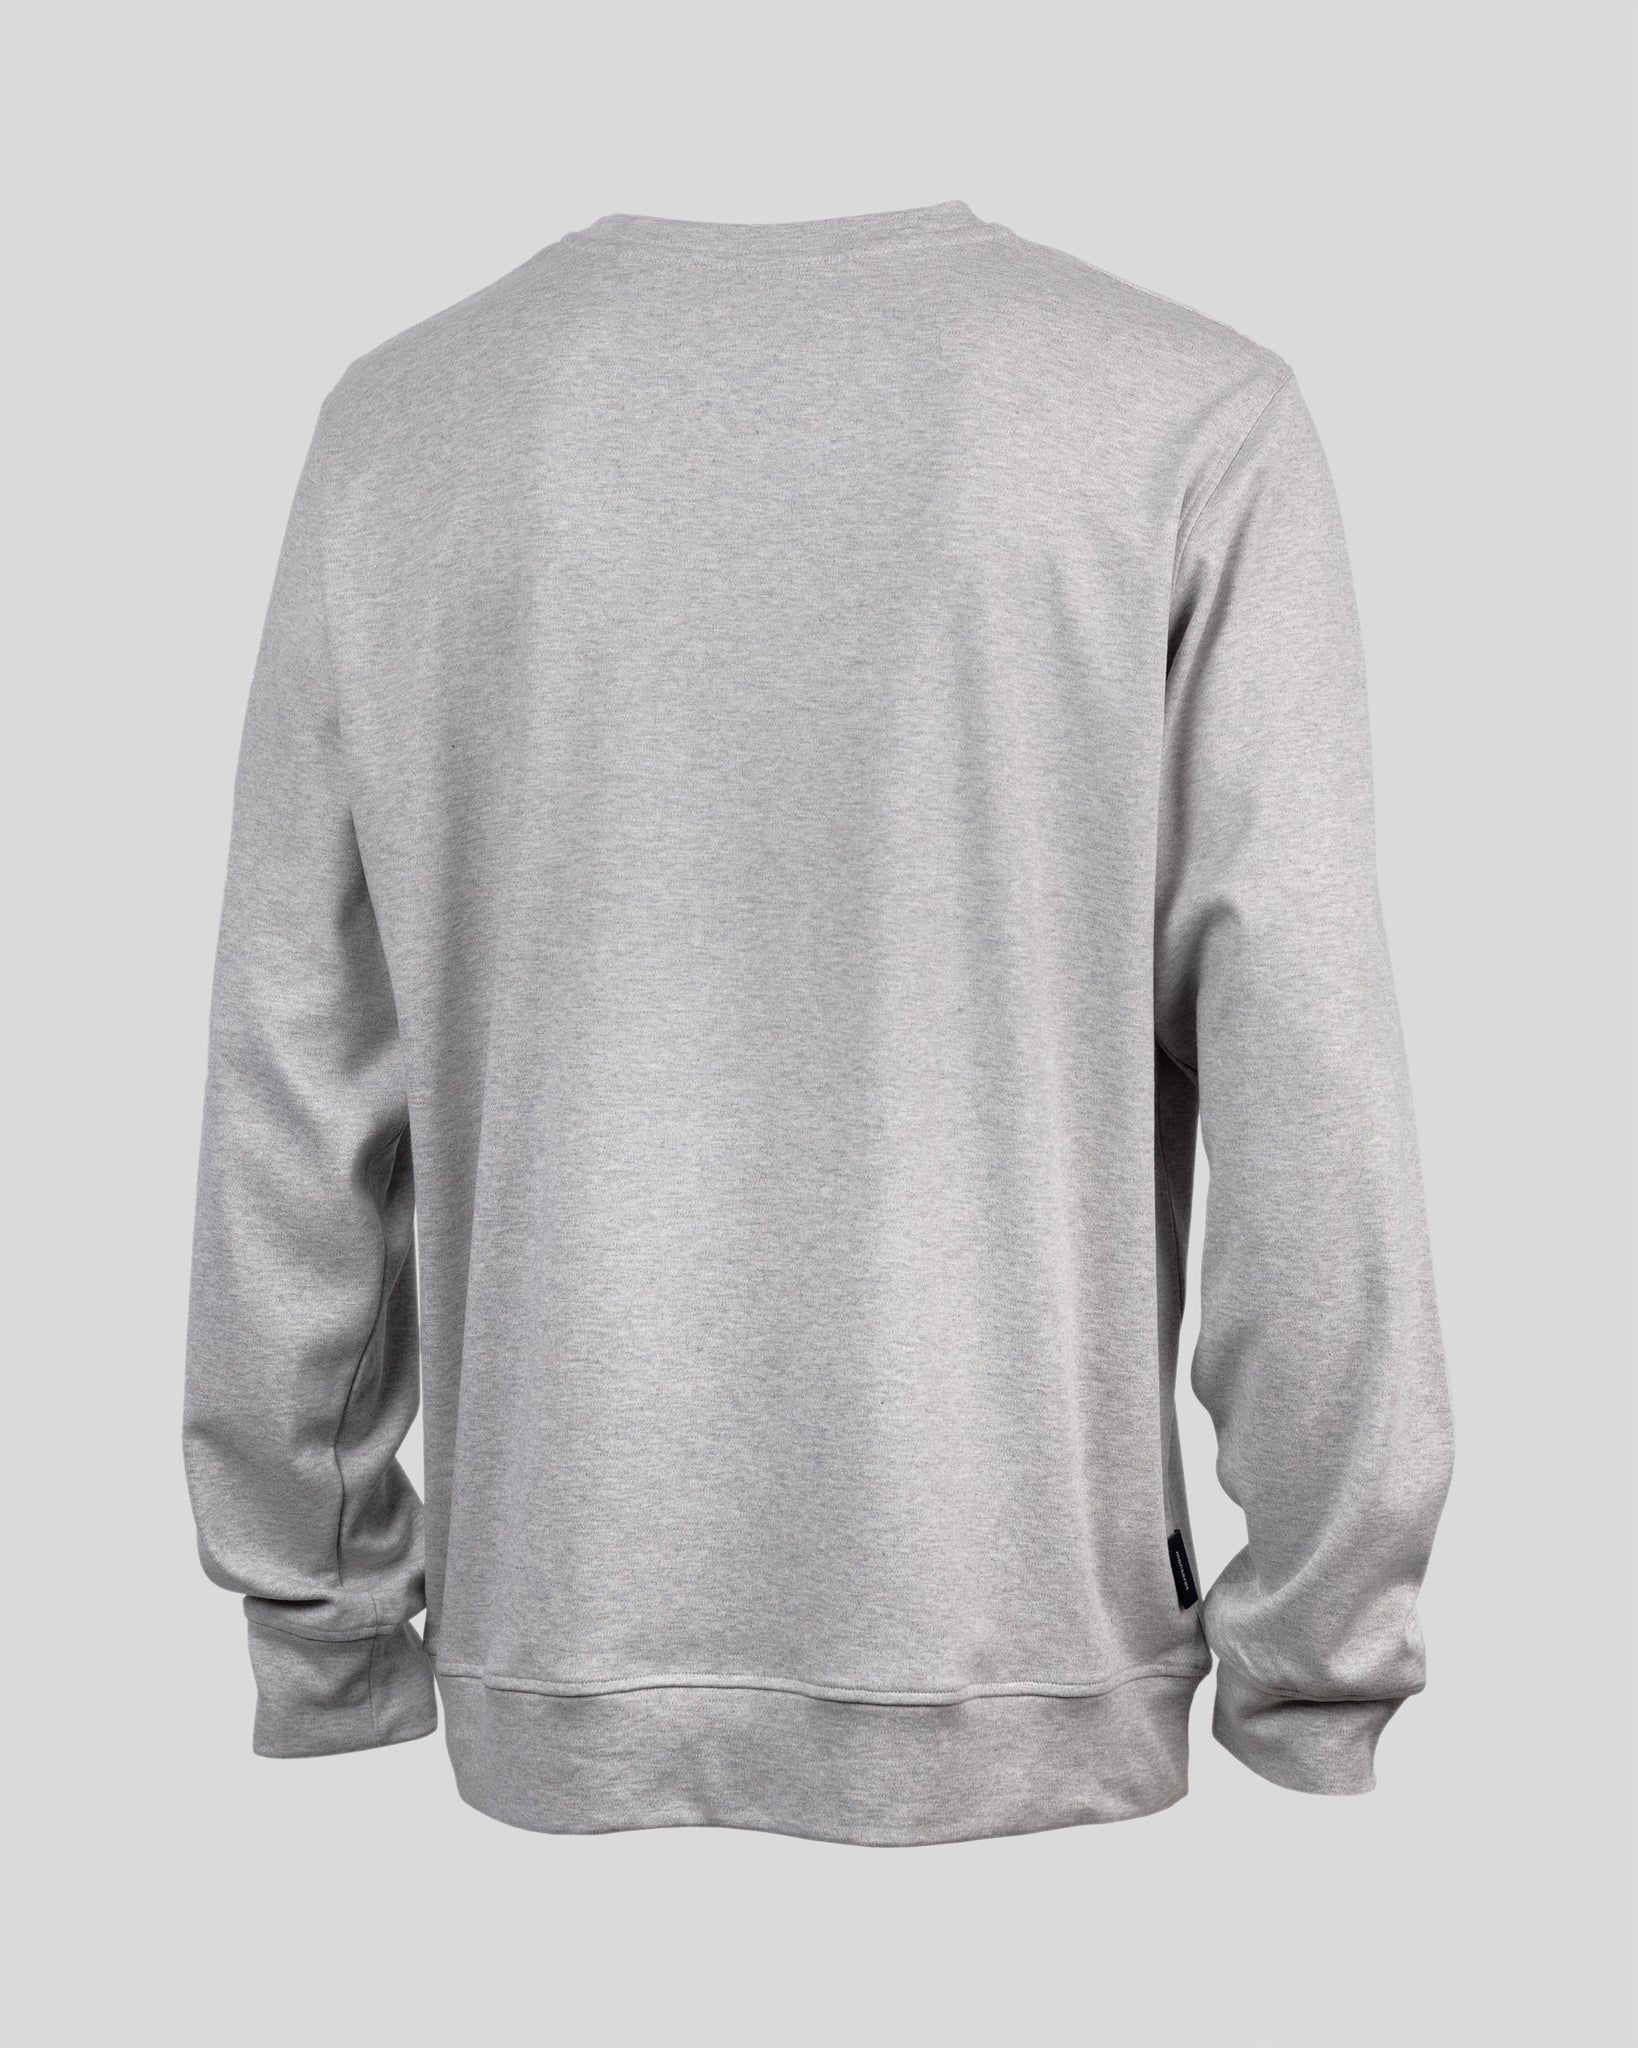 Light Sweater LS01 (organic cotton)